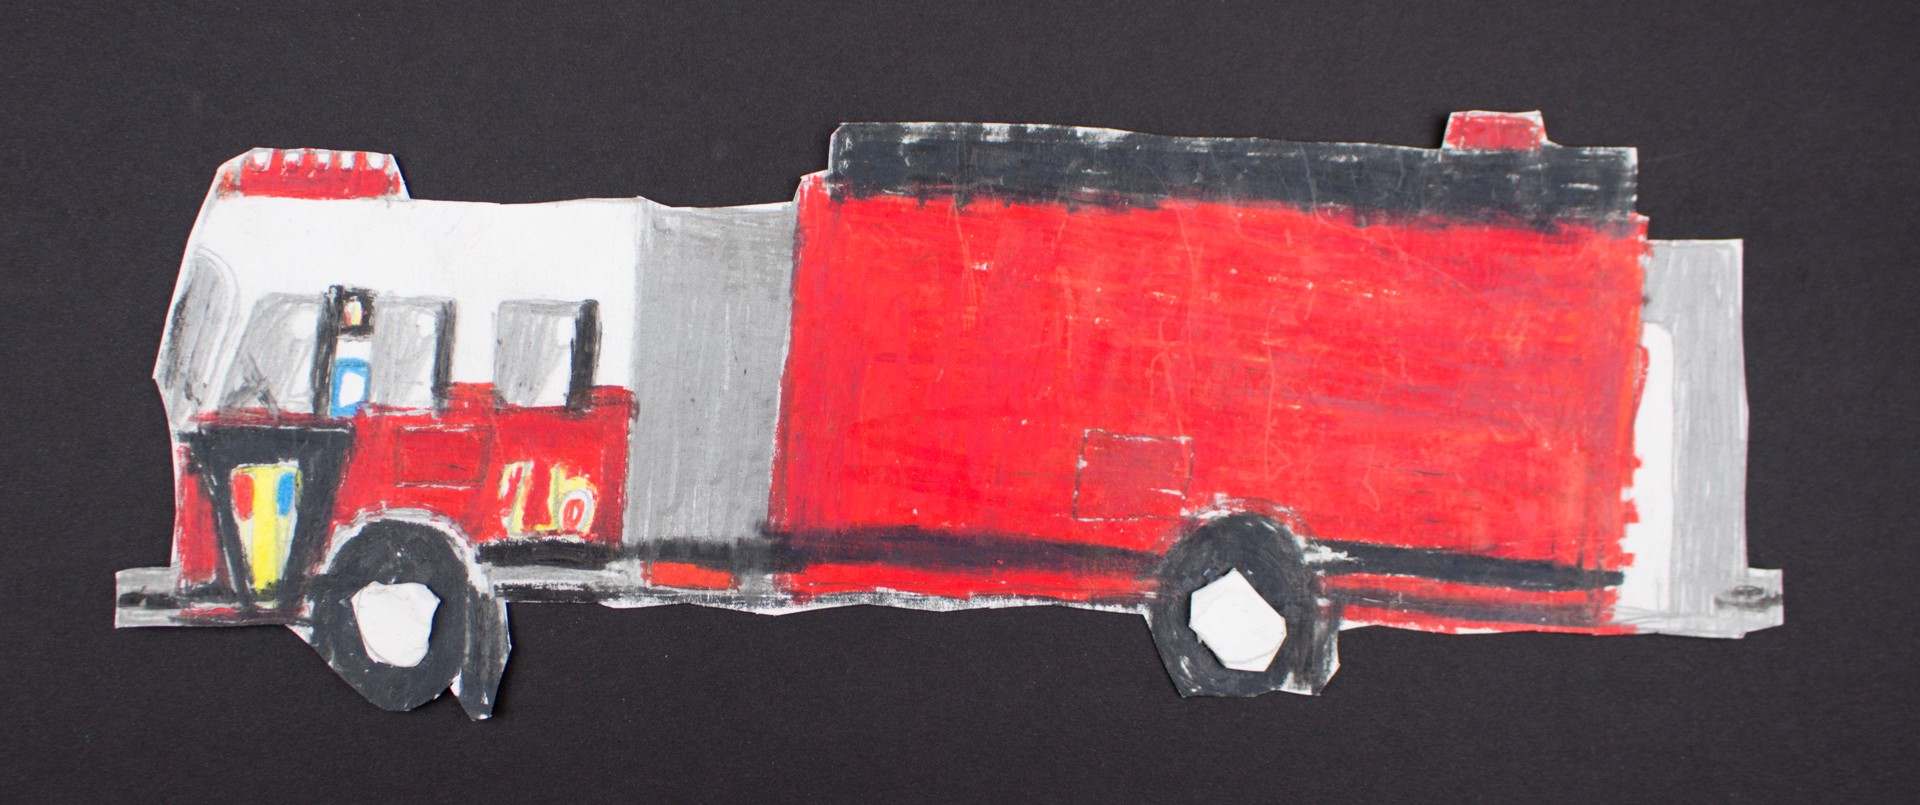 Fire Truck by Michael Haynes